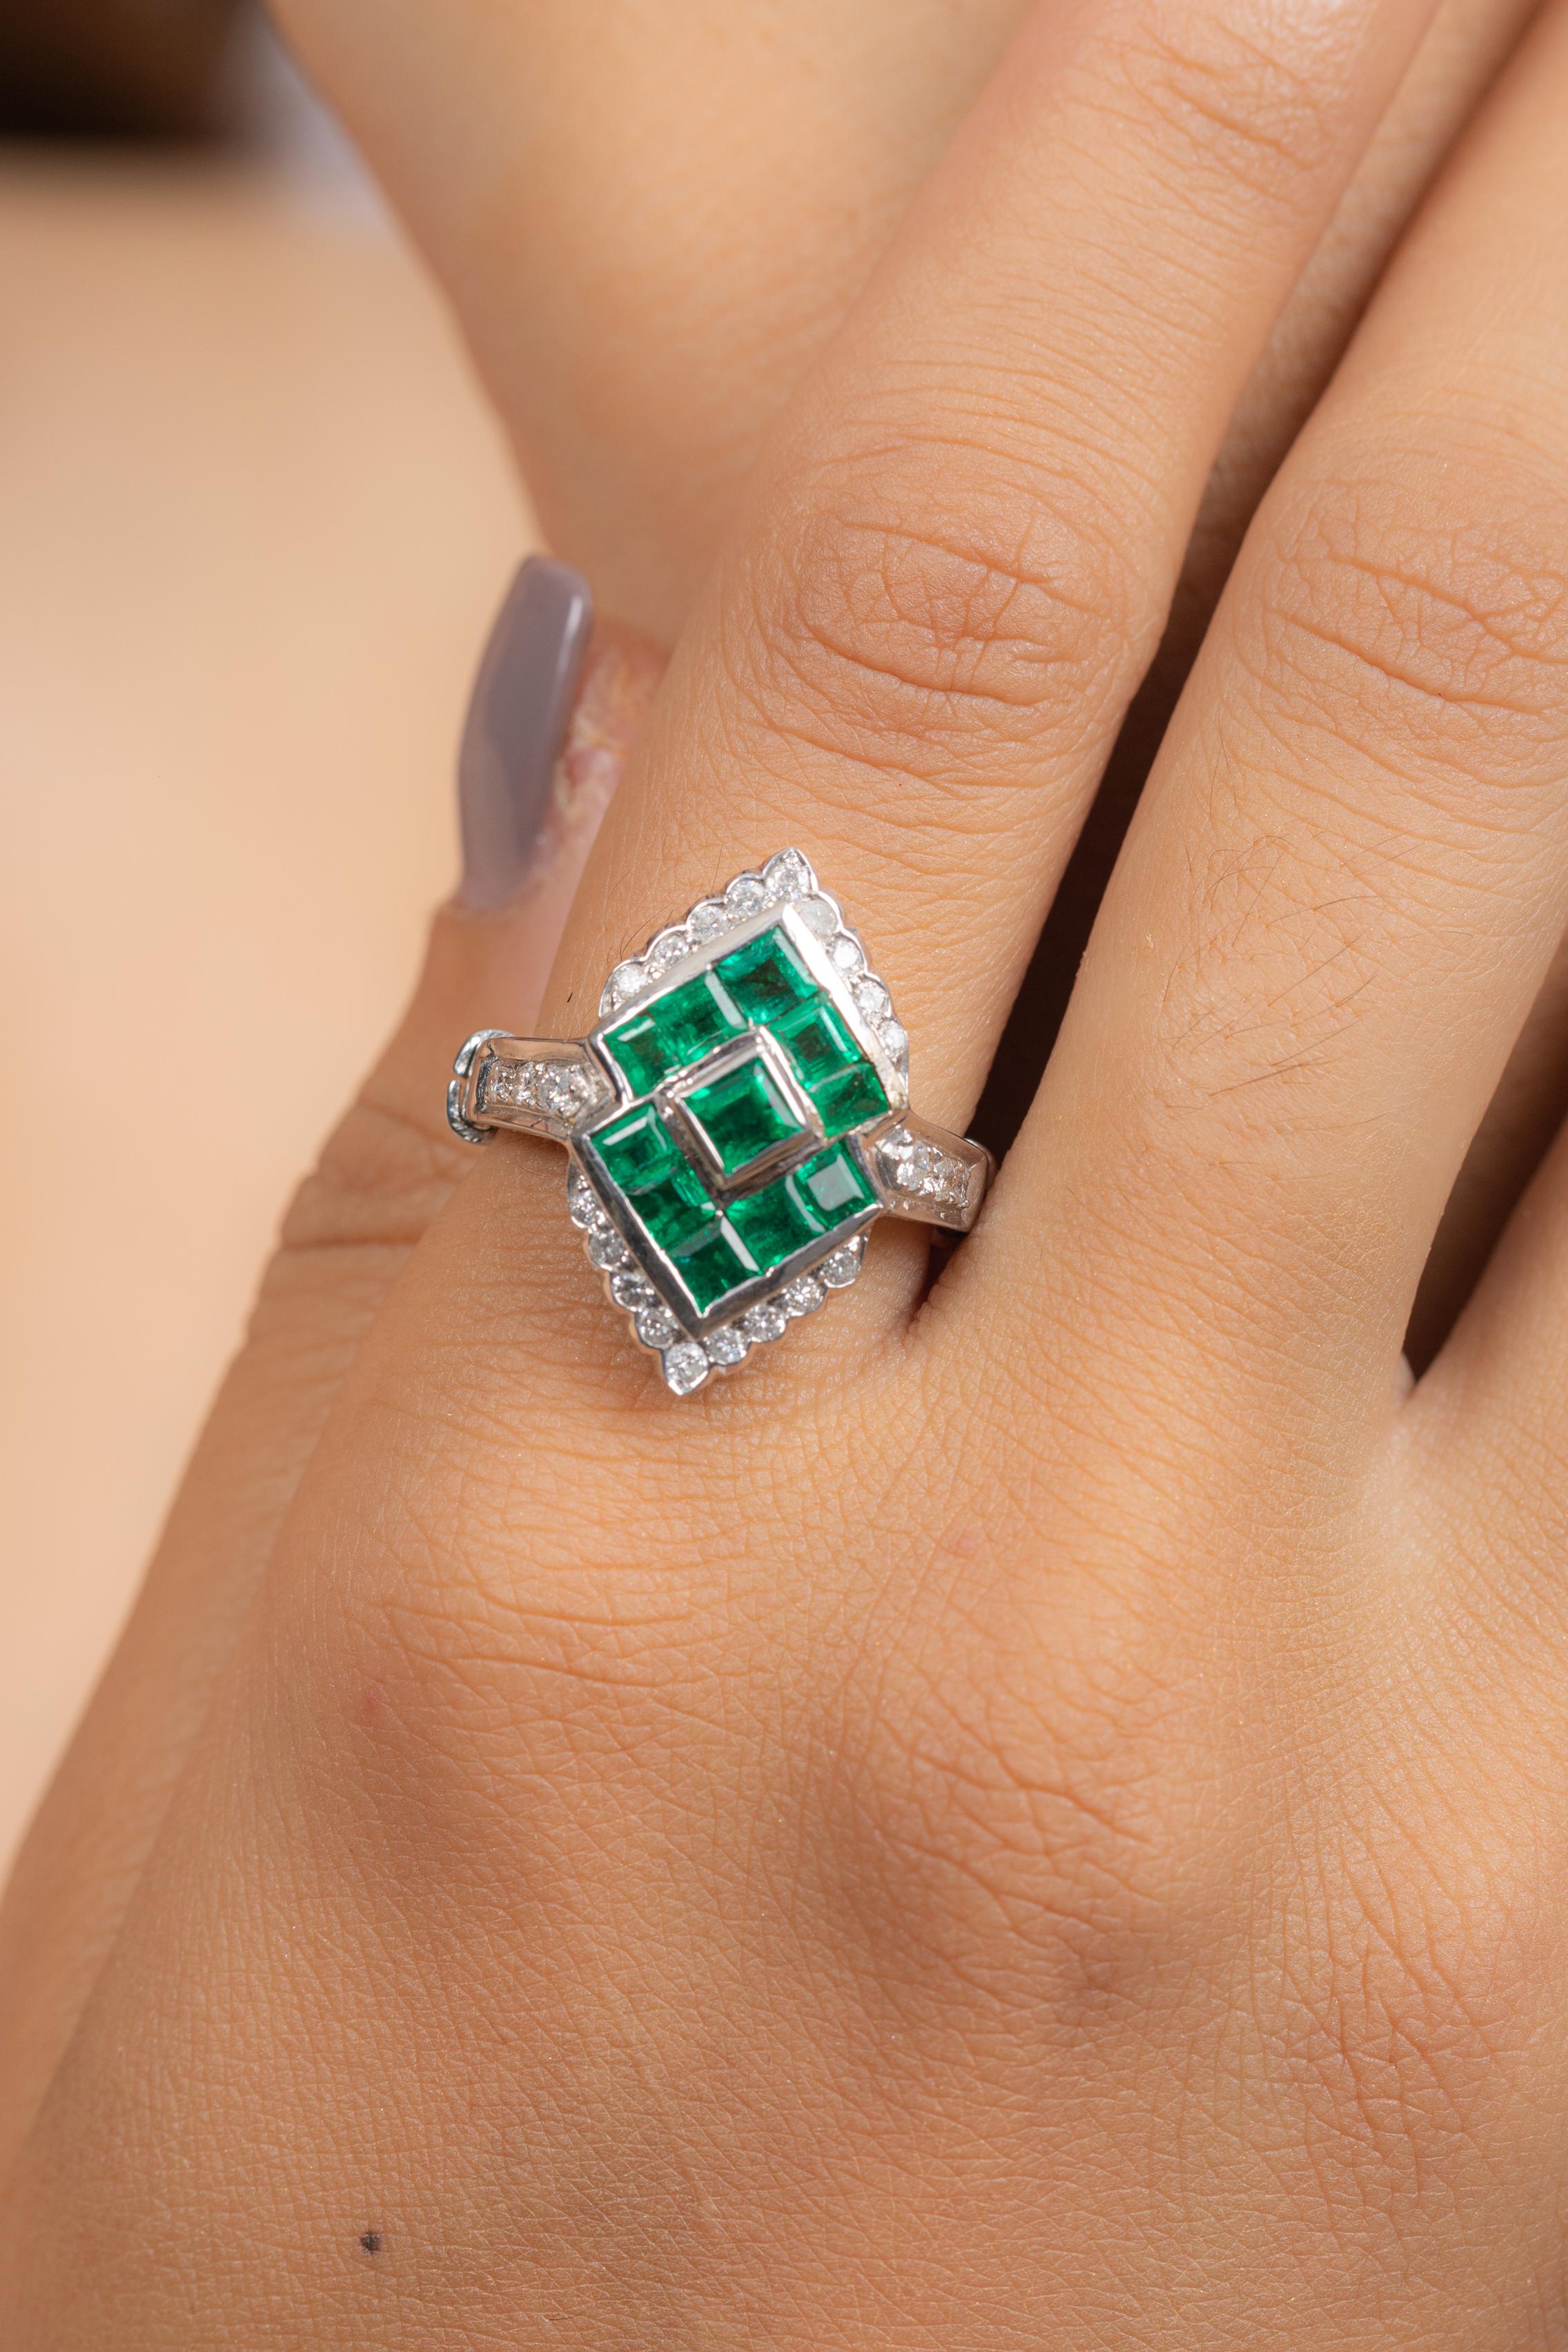 For Sale:  18k Solid White Gold Emerald Diamond Ring, Fine Emerald Ring 4